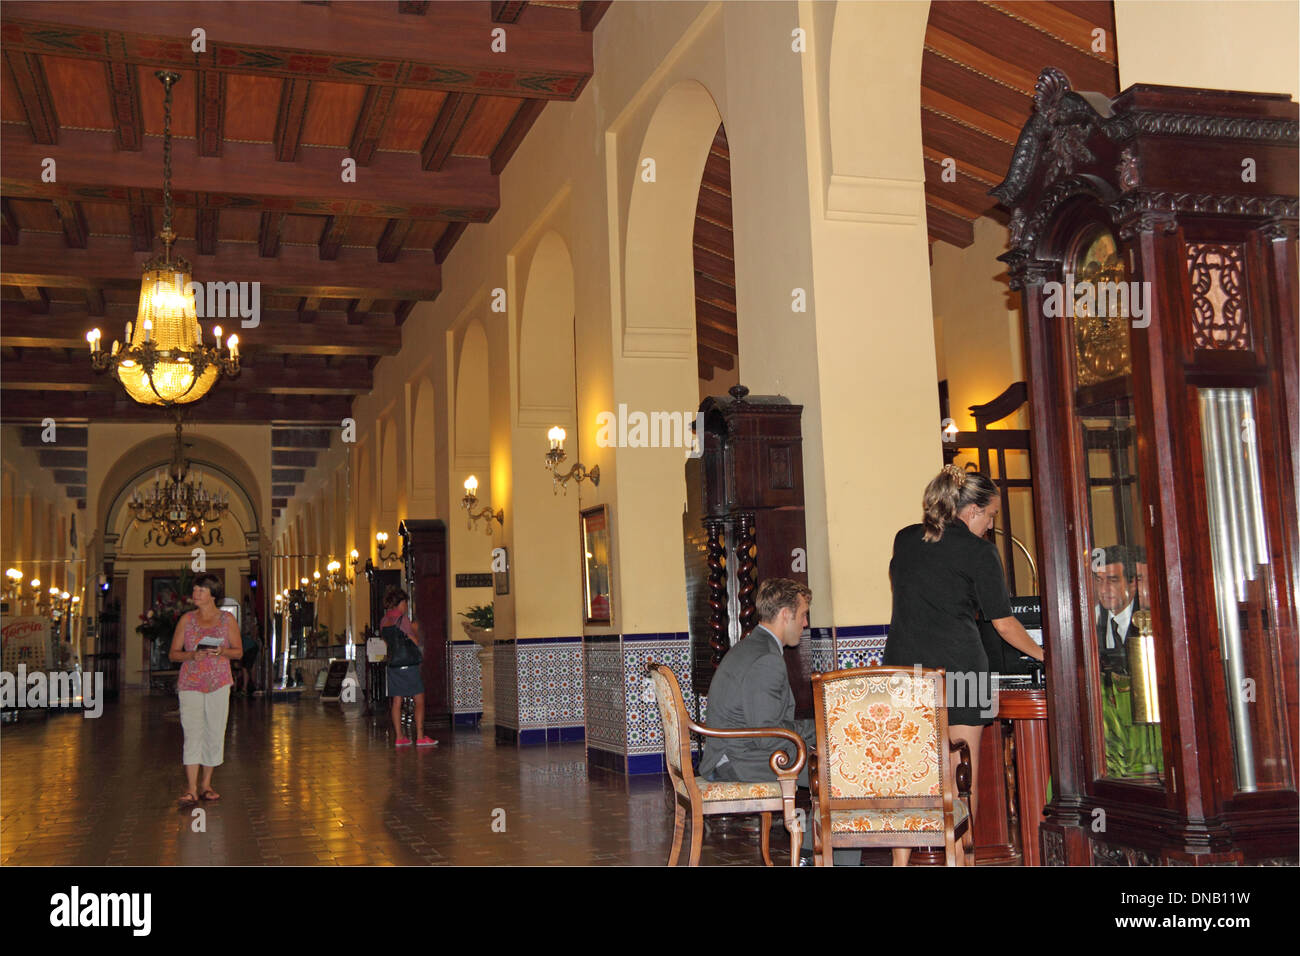 Lobby, Hotel Nacional de Cuba, Calle 0, Vedado, Havana, Cuba, Caribbean Sea, Central America Stock Photo